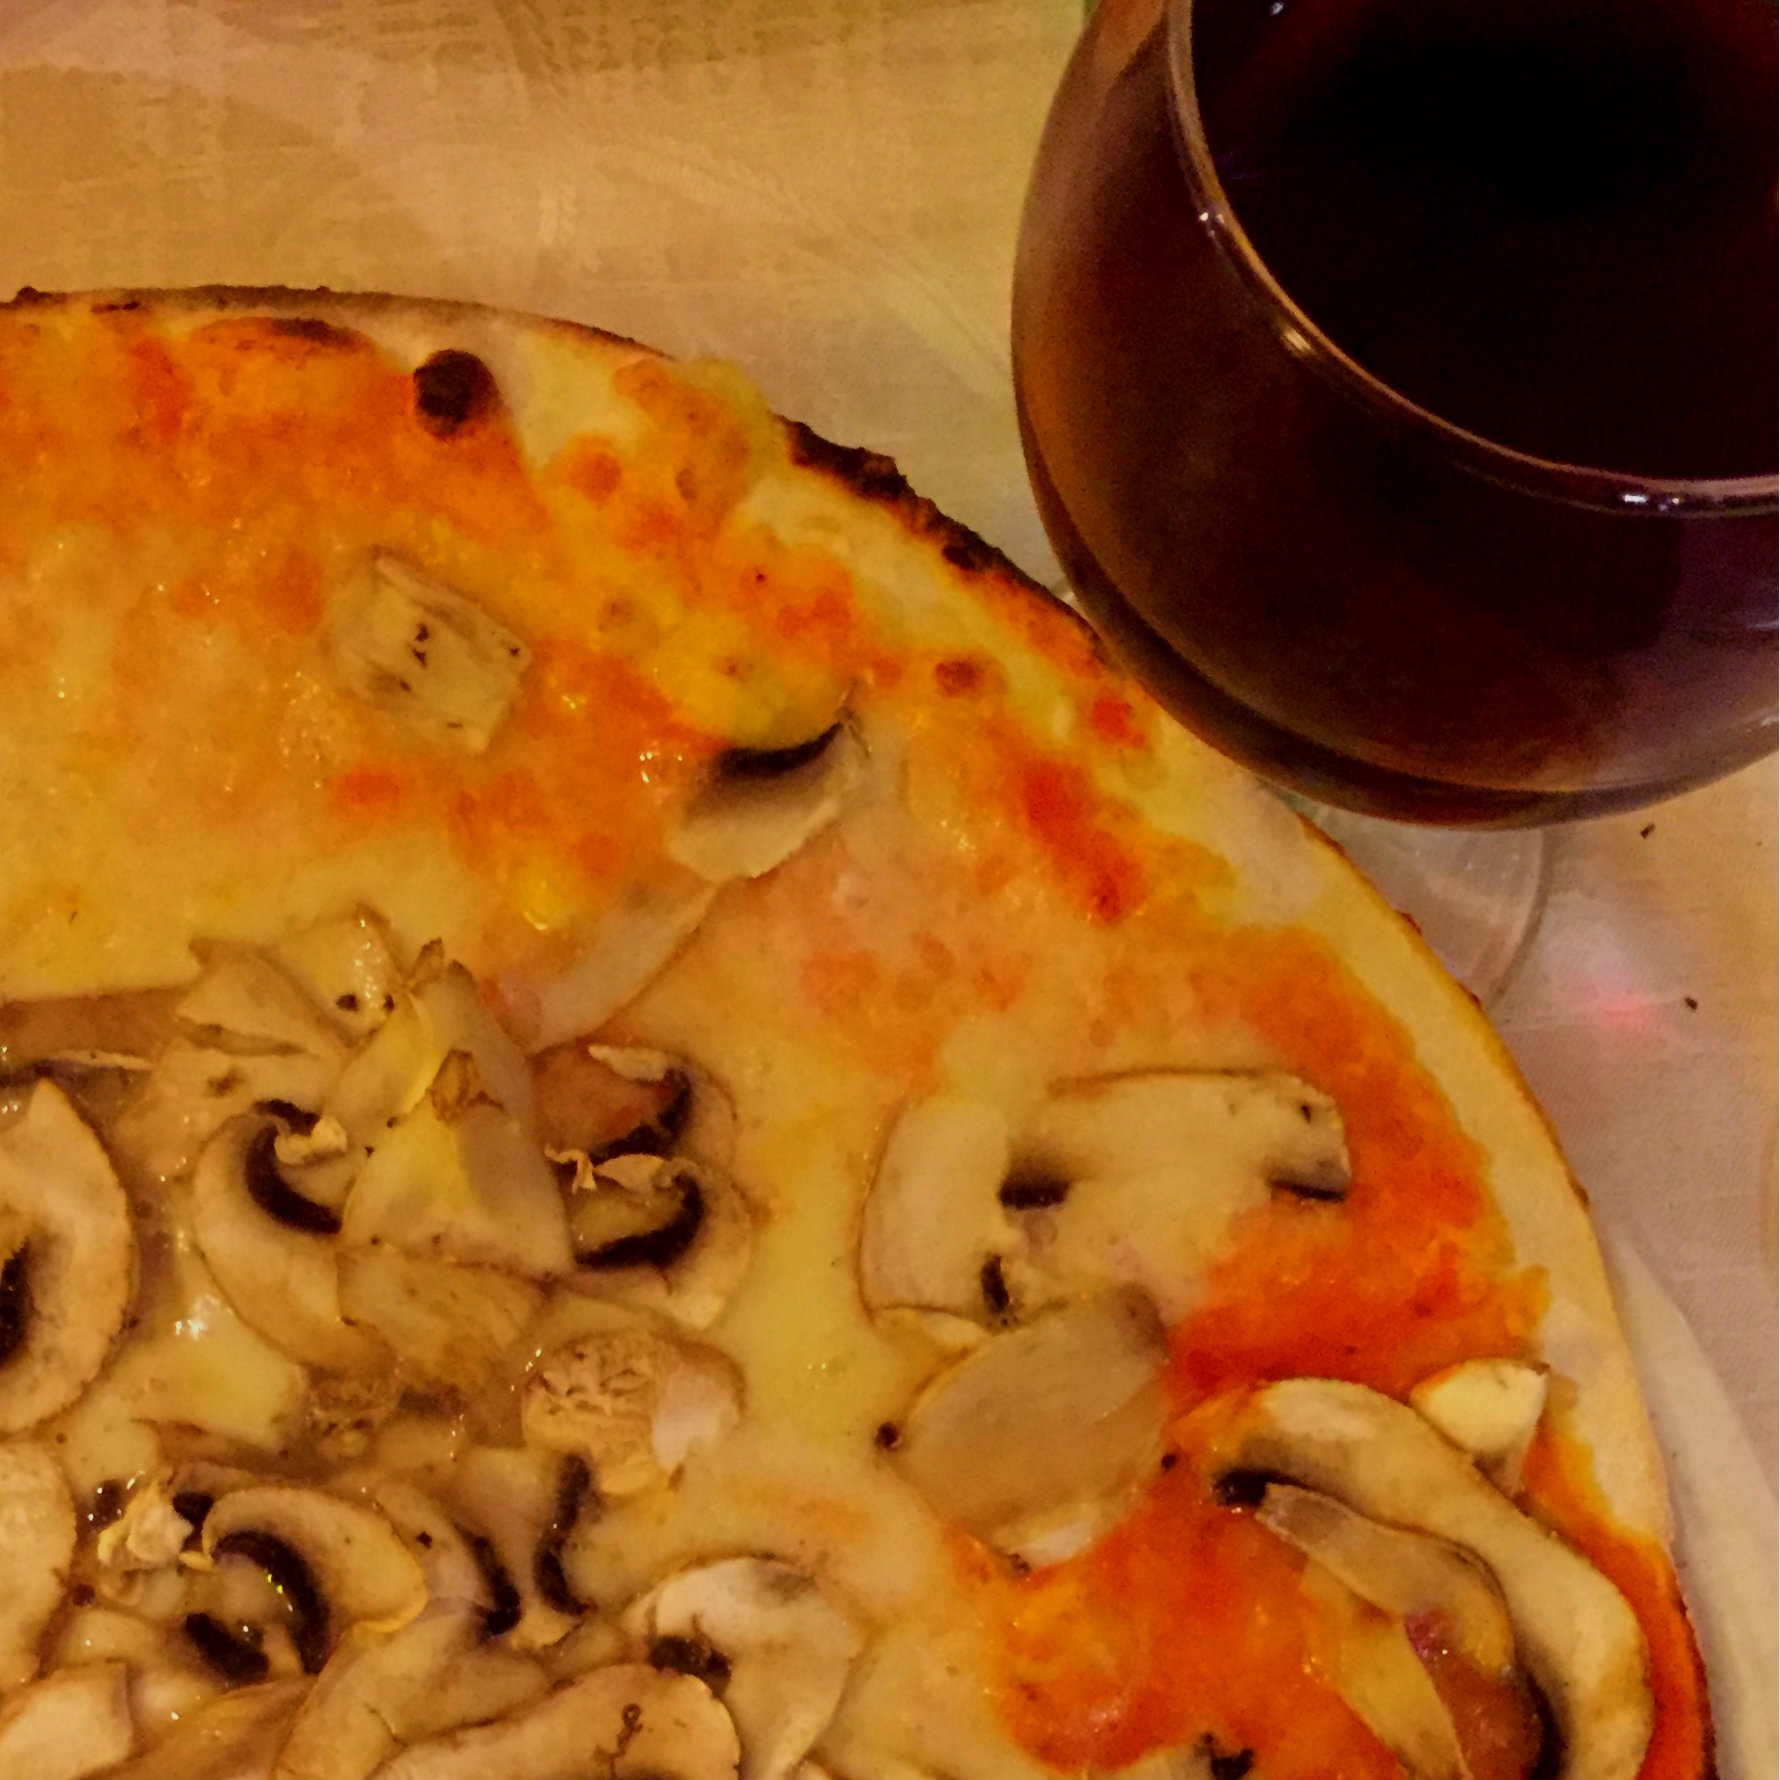 Mushroom pizza and house wine, Bella Napoli